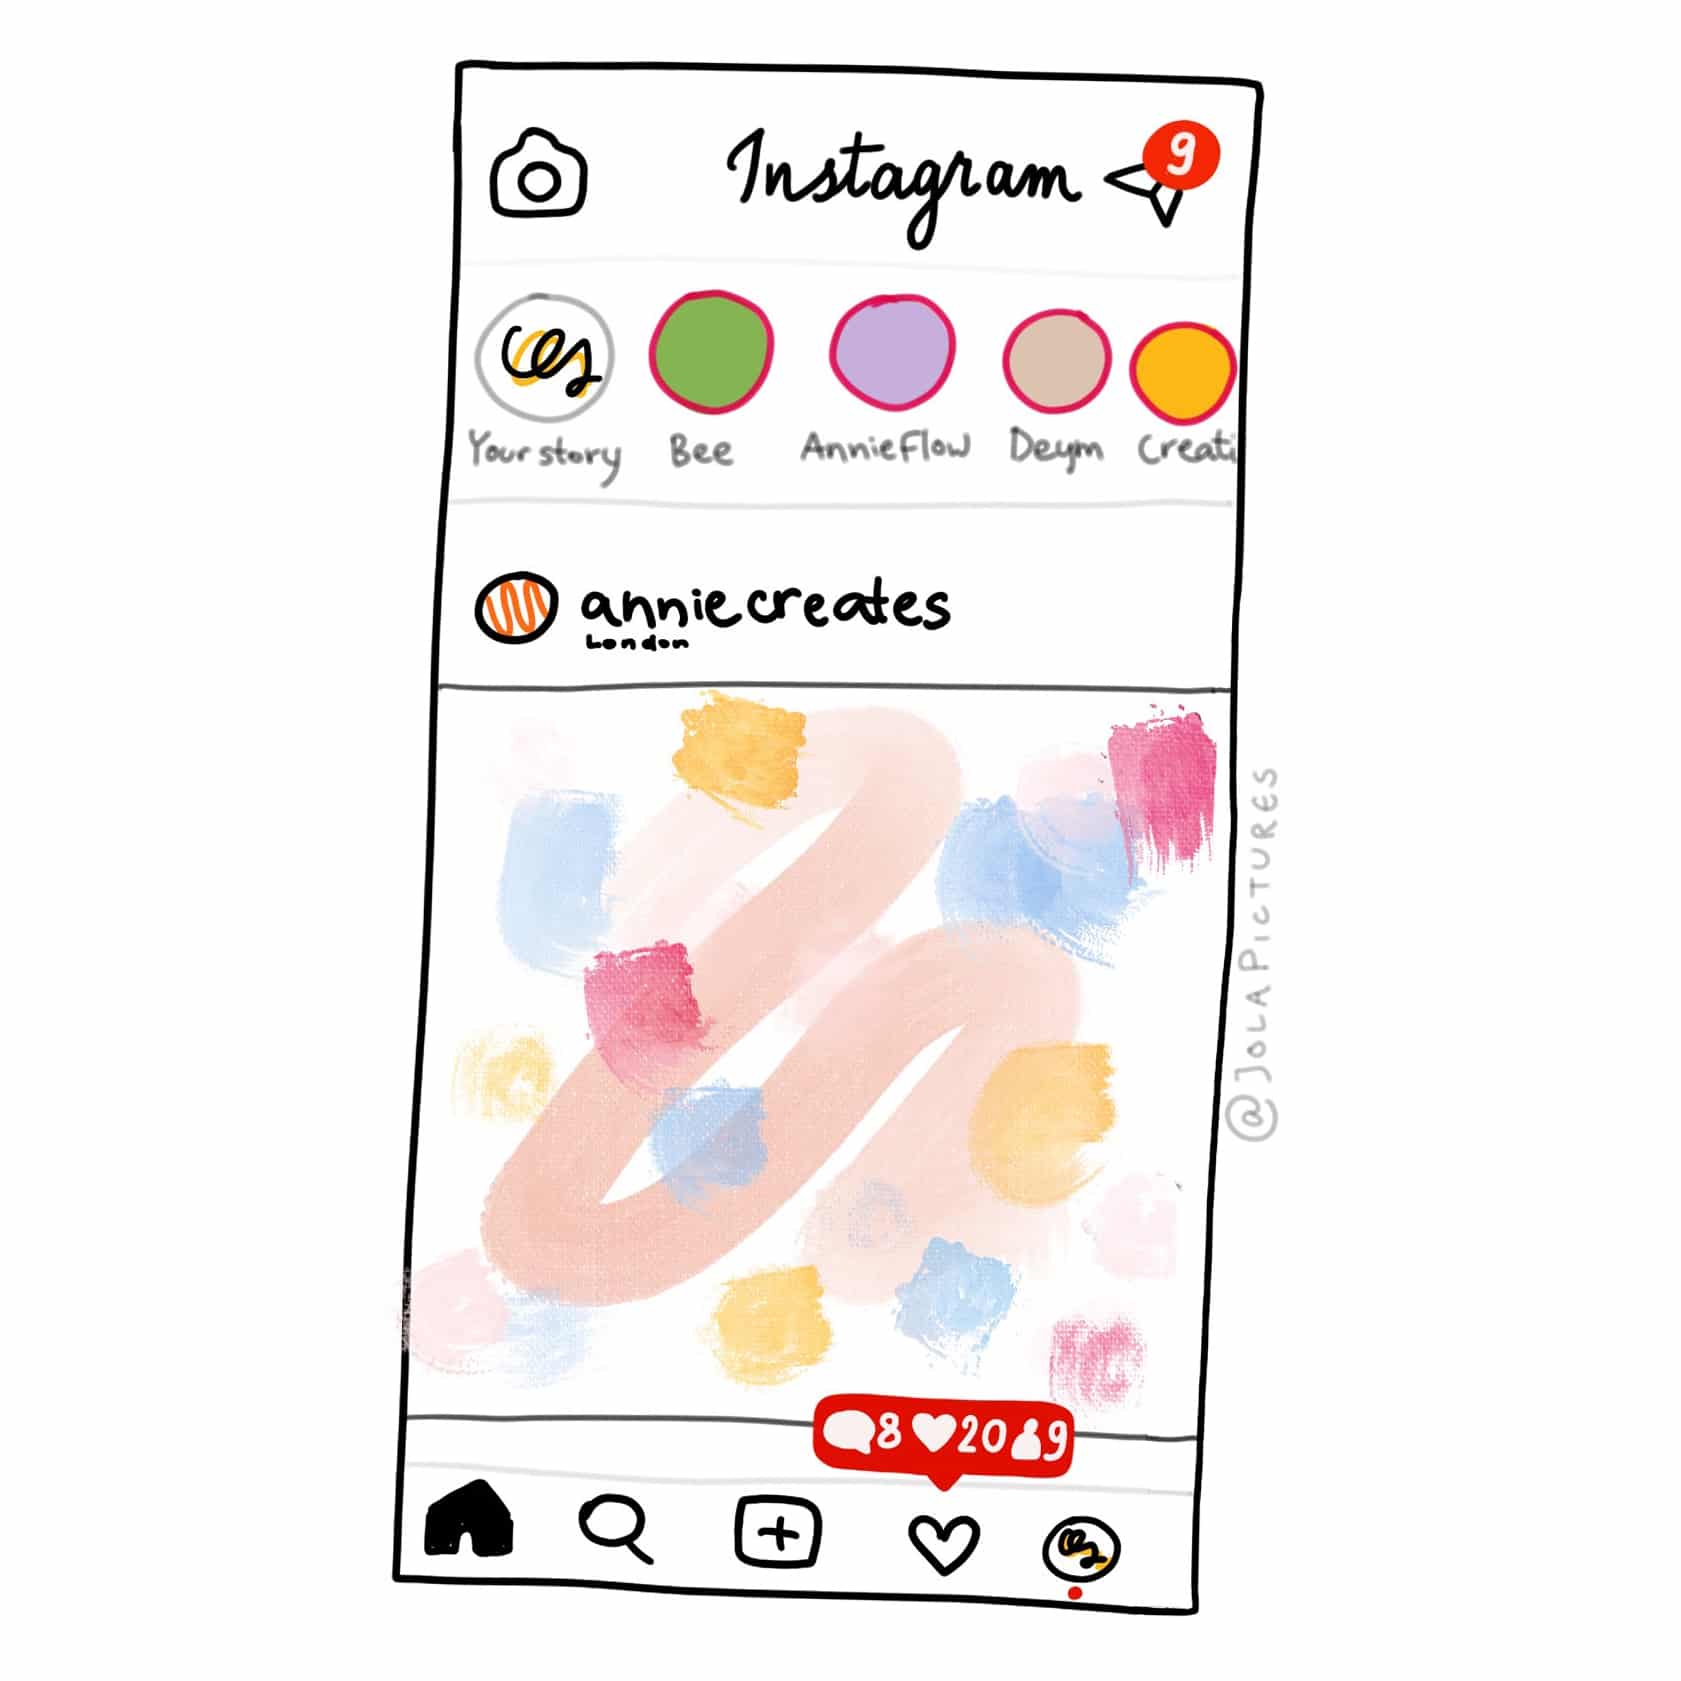 Grow your Instagram audience